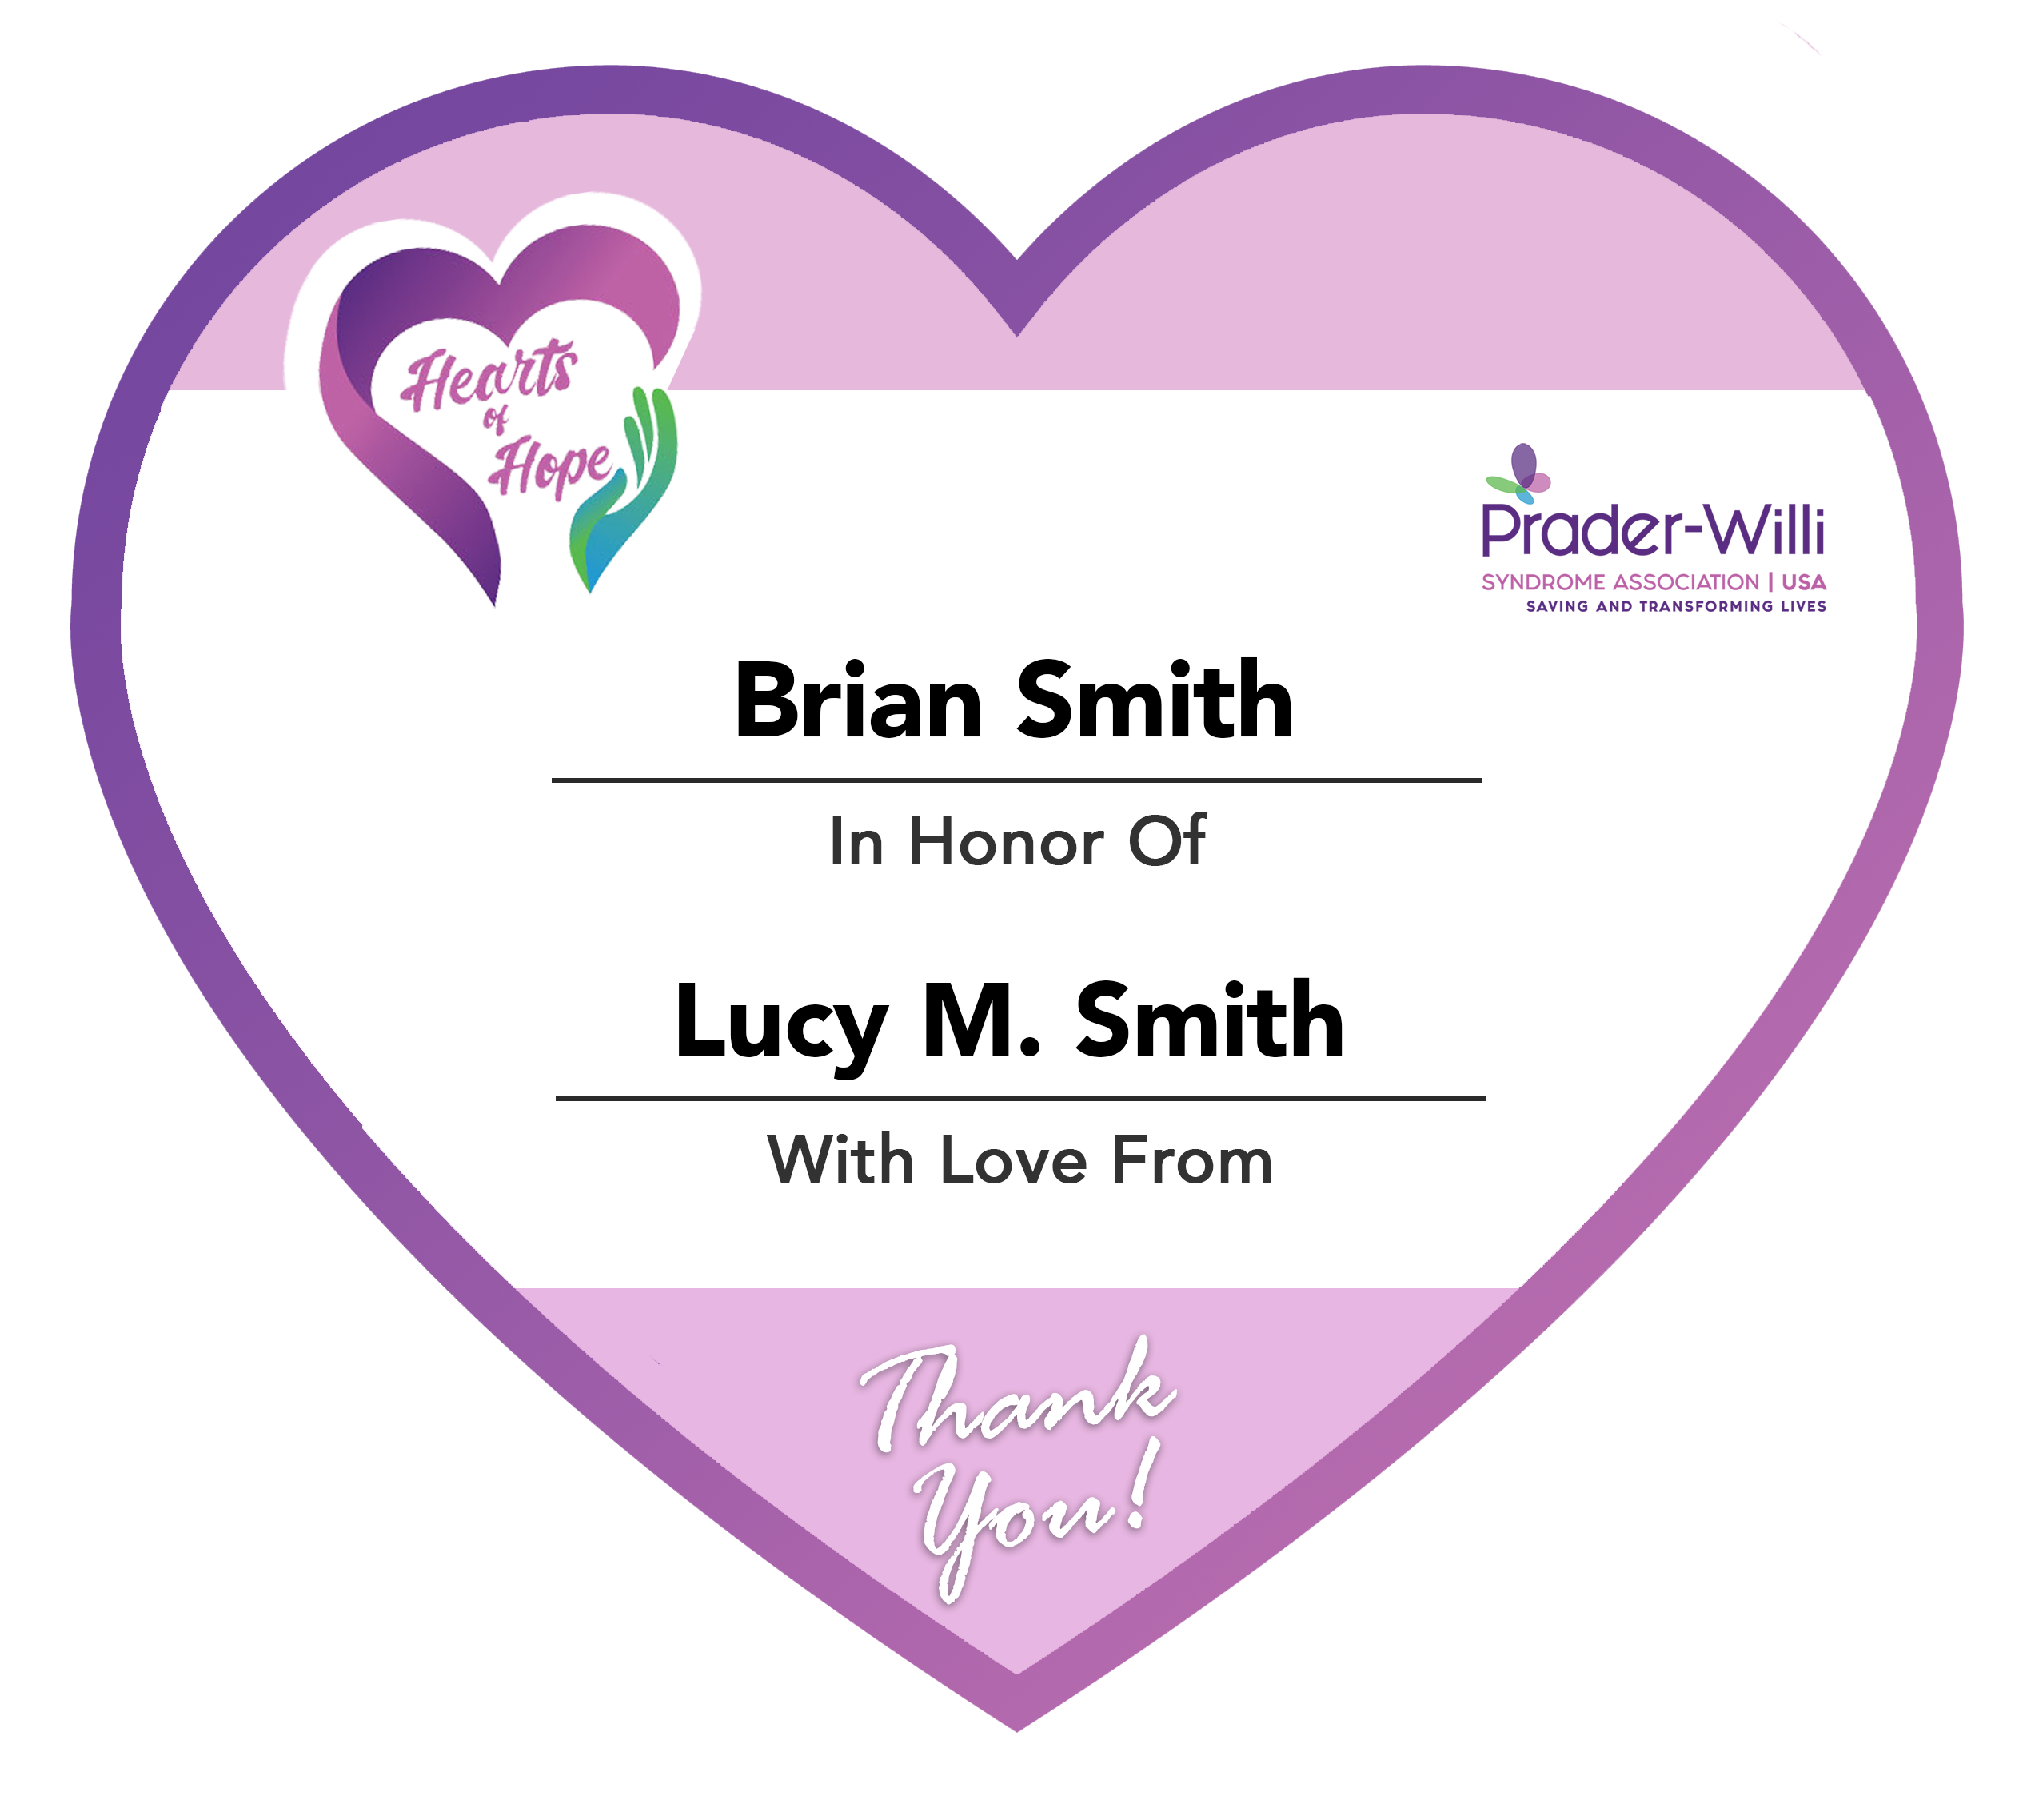 PWSA Paperheart BrianSmith, Prader-Willi Syndrome Association | USA